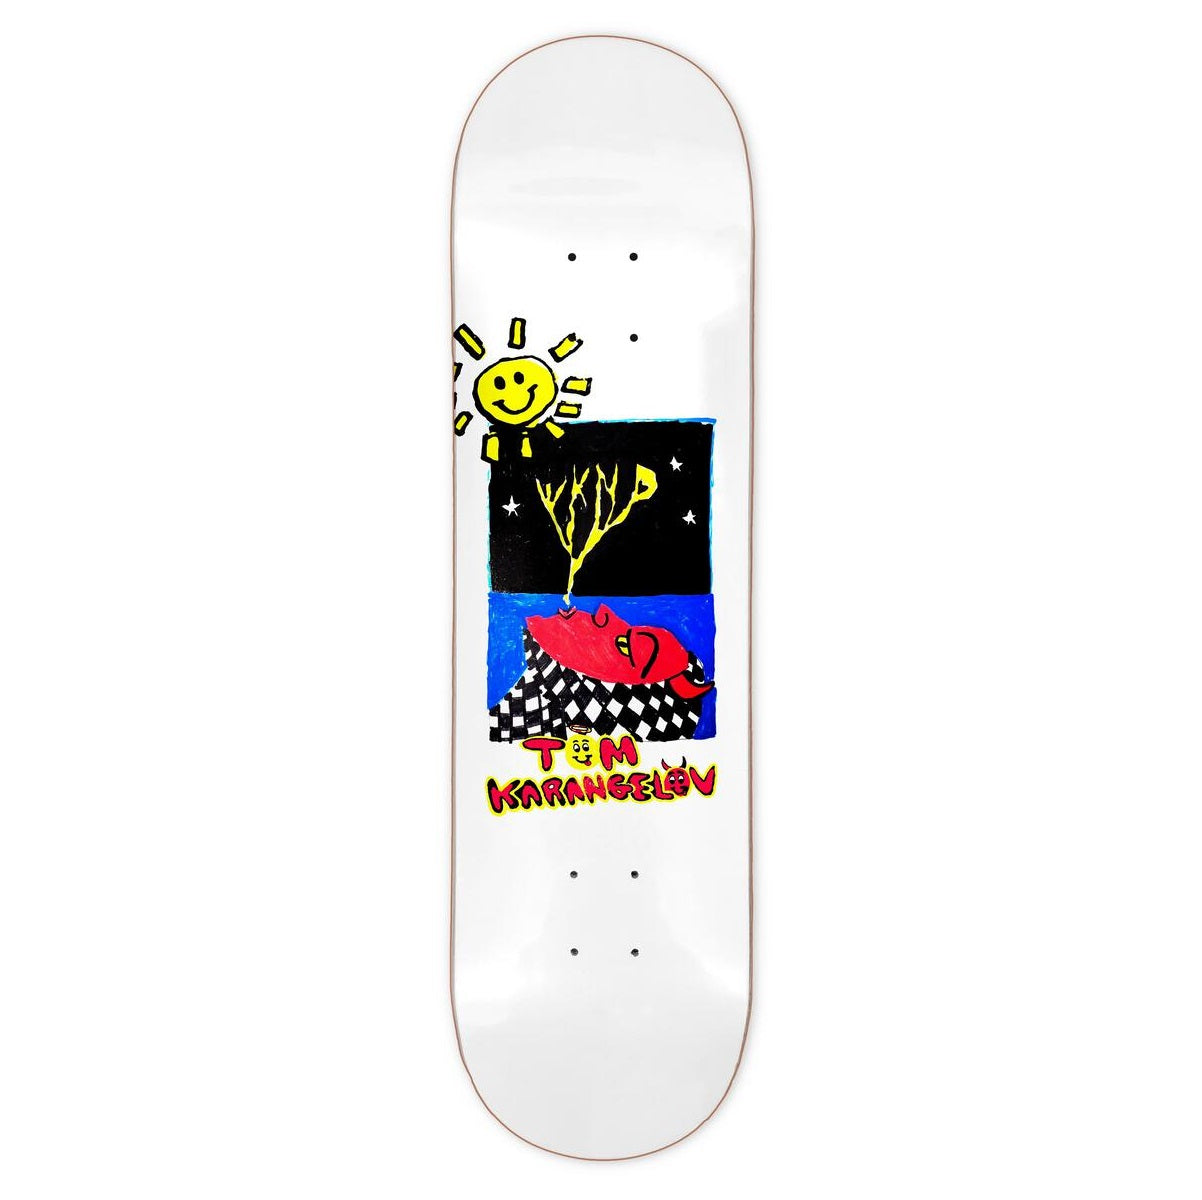 WKND Skateboards "Tom Karangelov- Soul System" 8.375" Deck